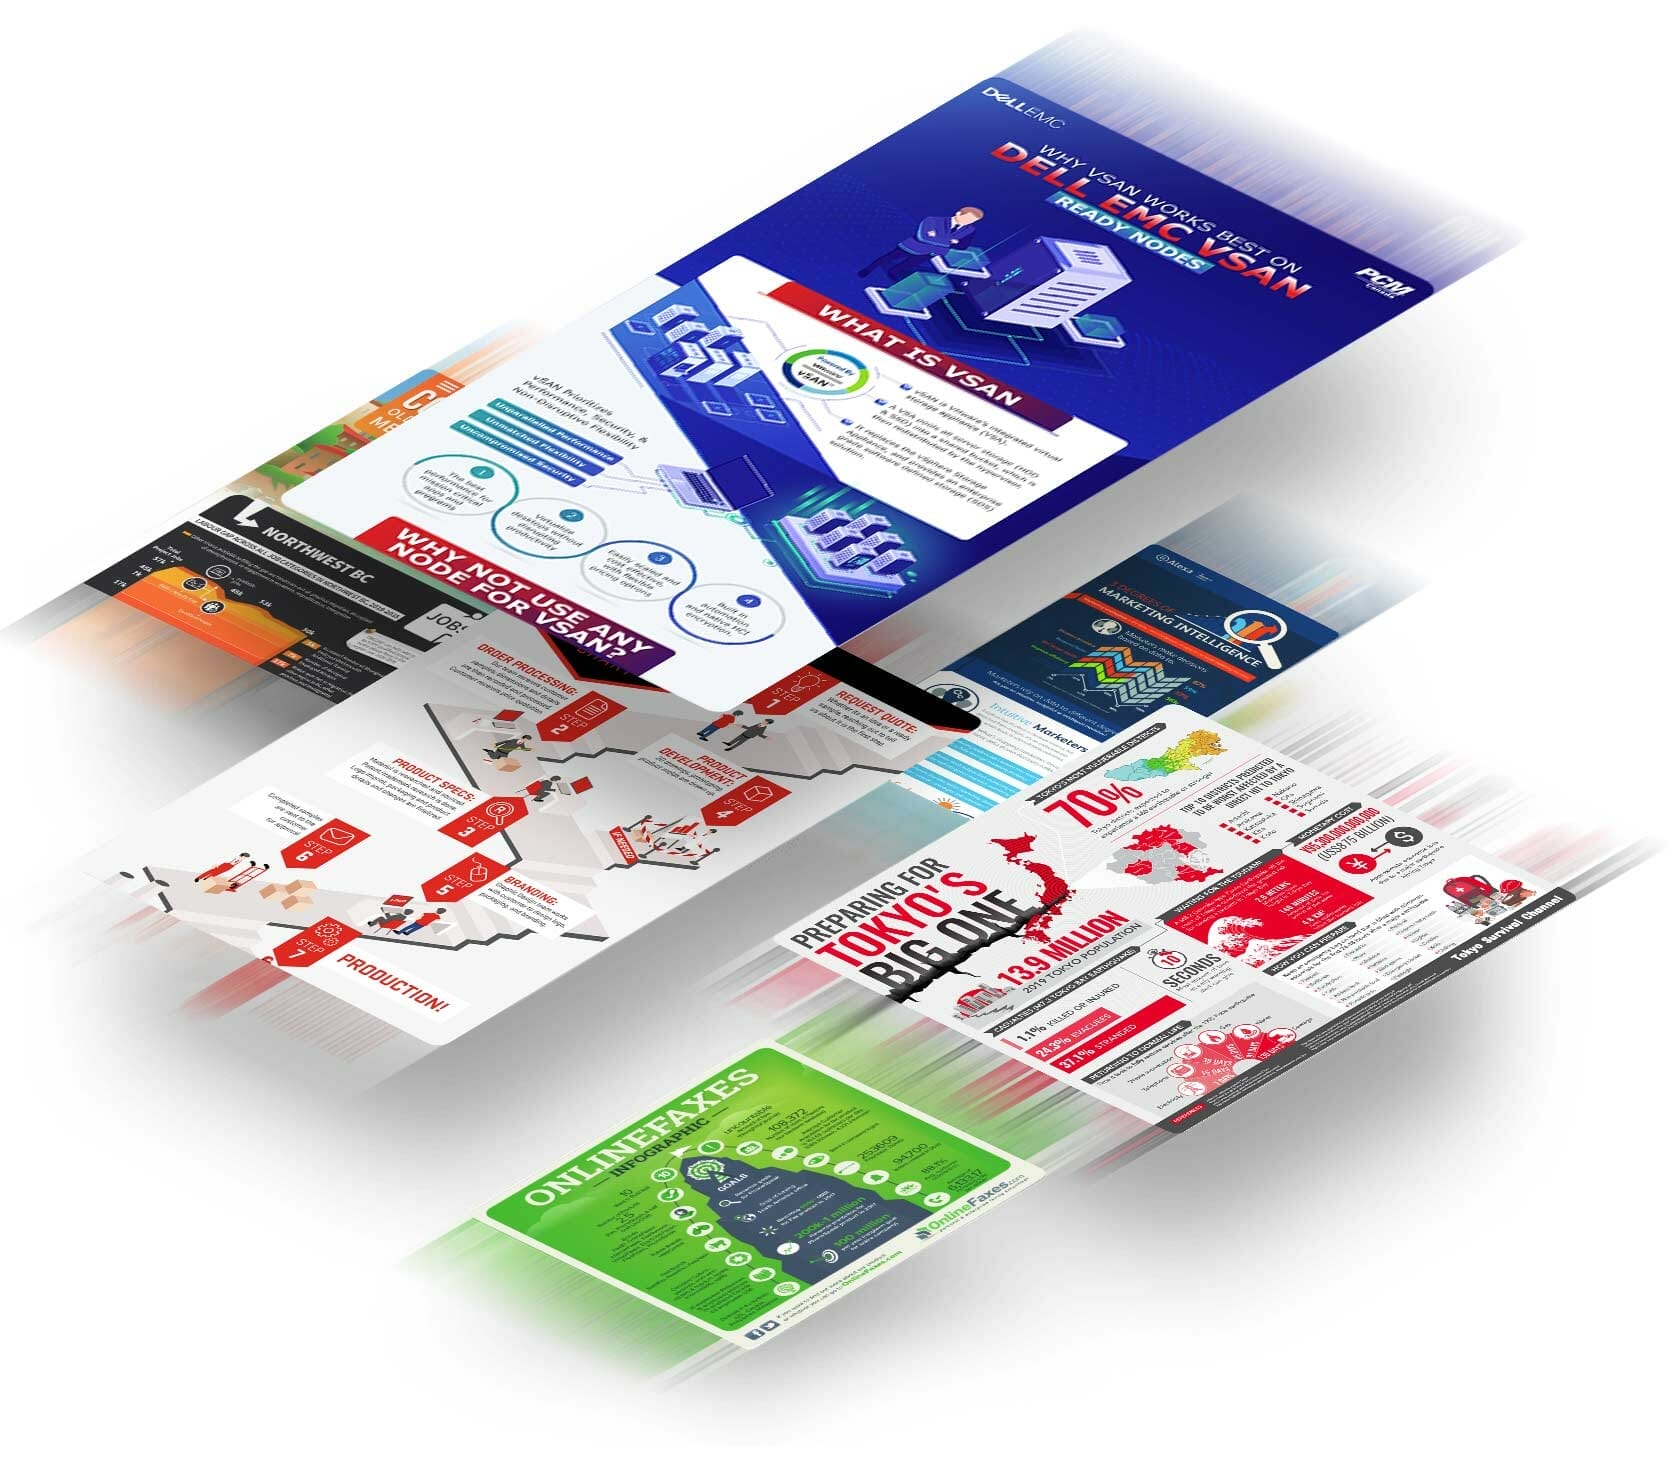 Infographic Design Agency,Ebook Designer,Whitepaper Designer,Infographic Design Company,Infographic Designer,Infographic Design Firms